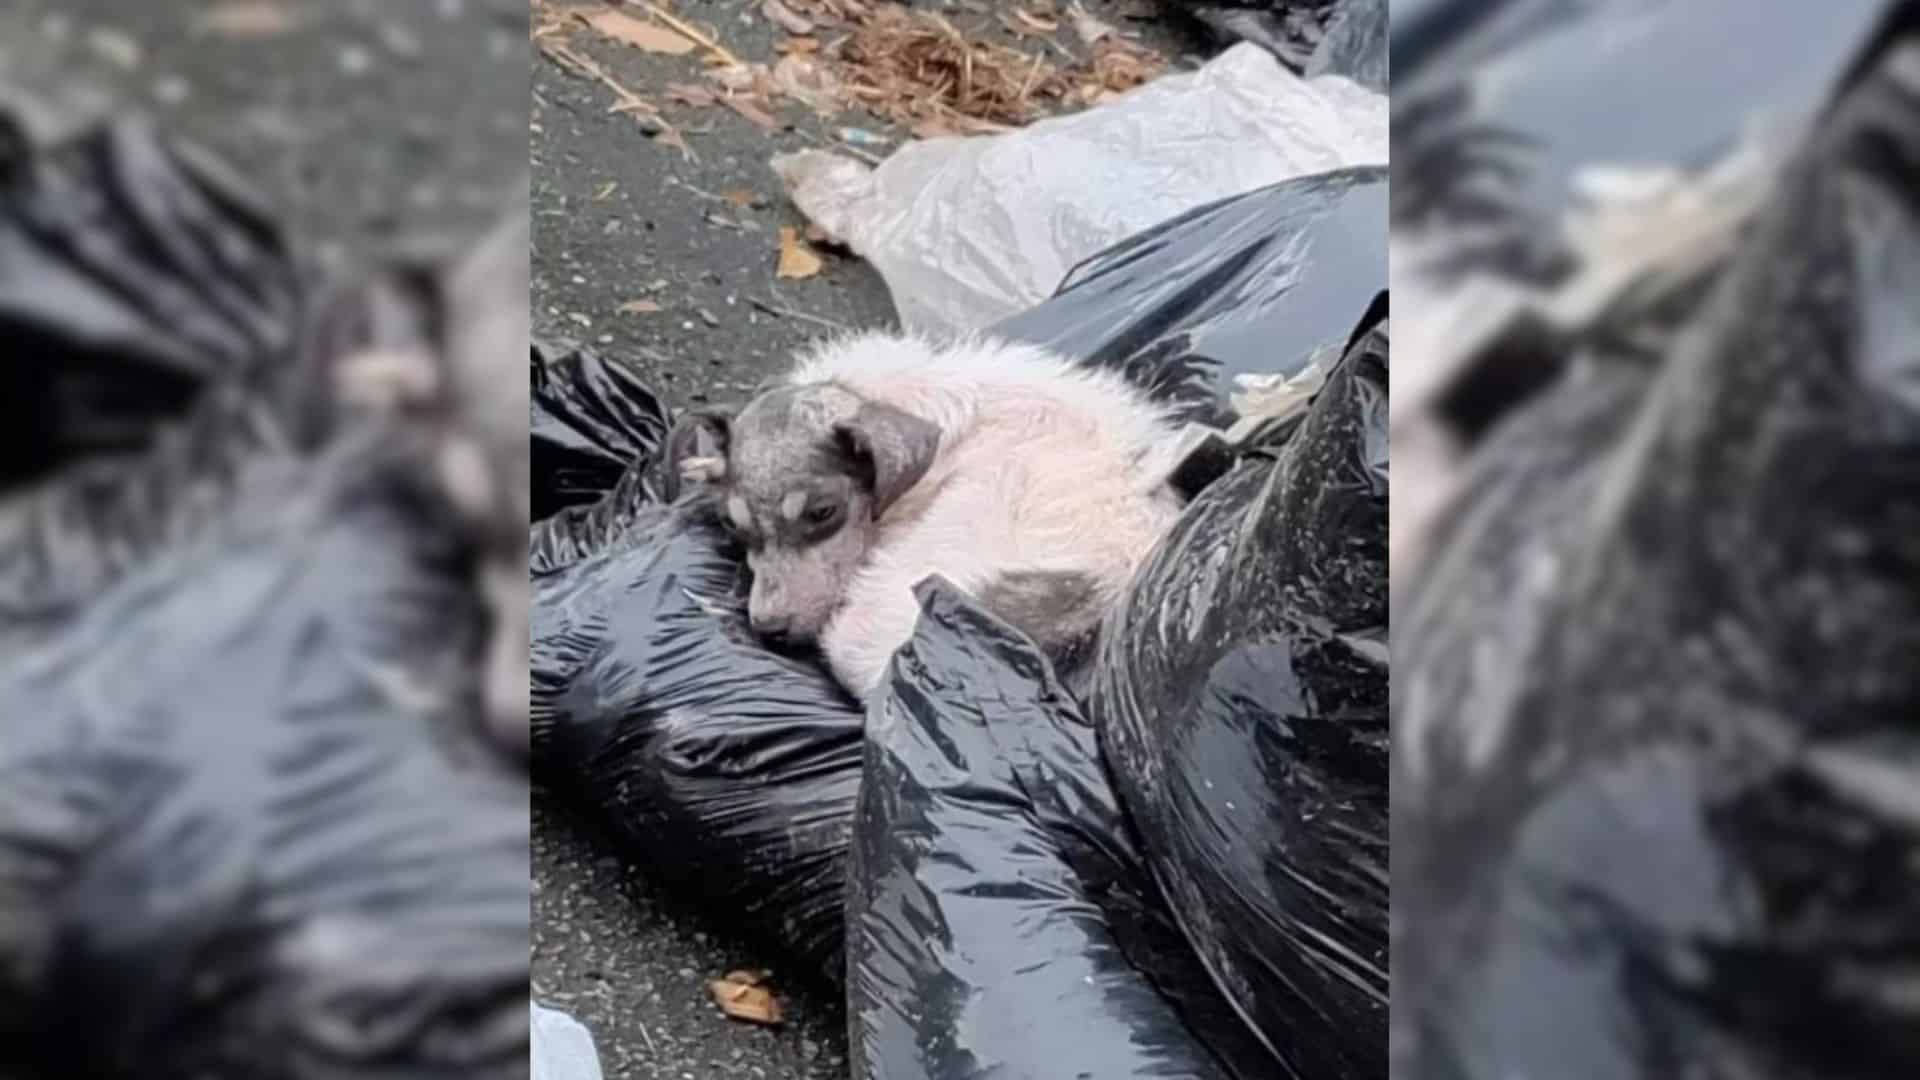 stray dog sleeps on garbage bags